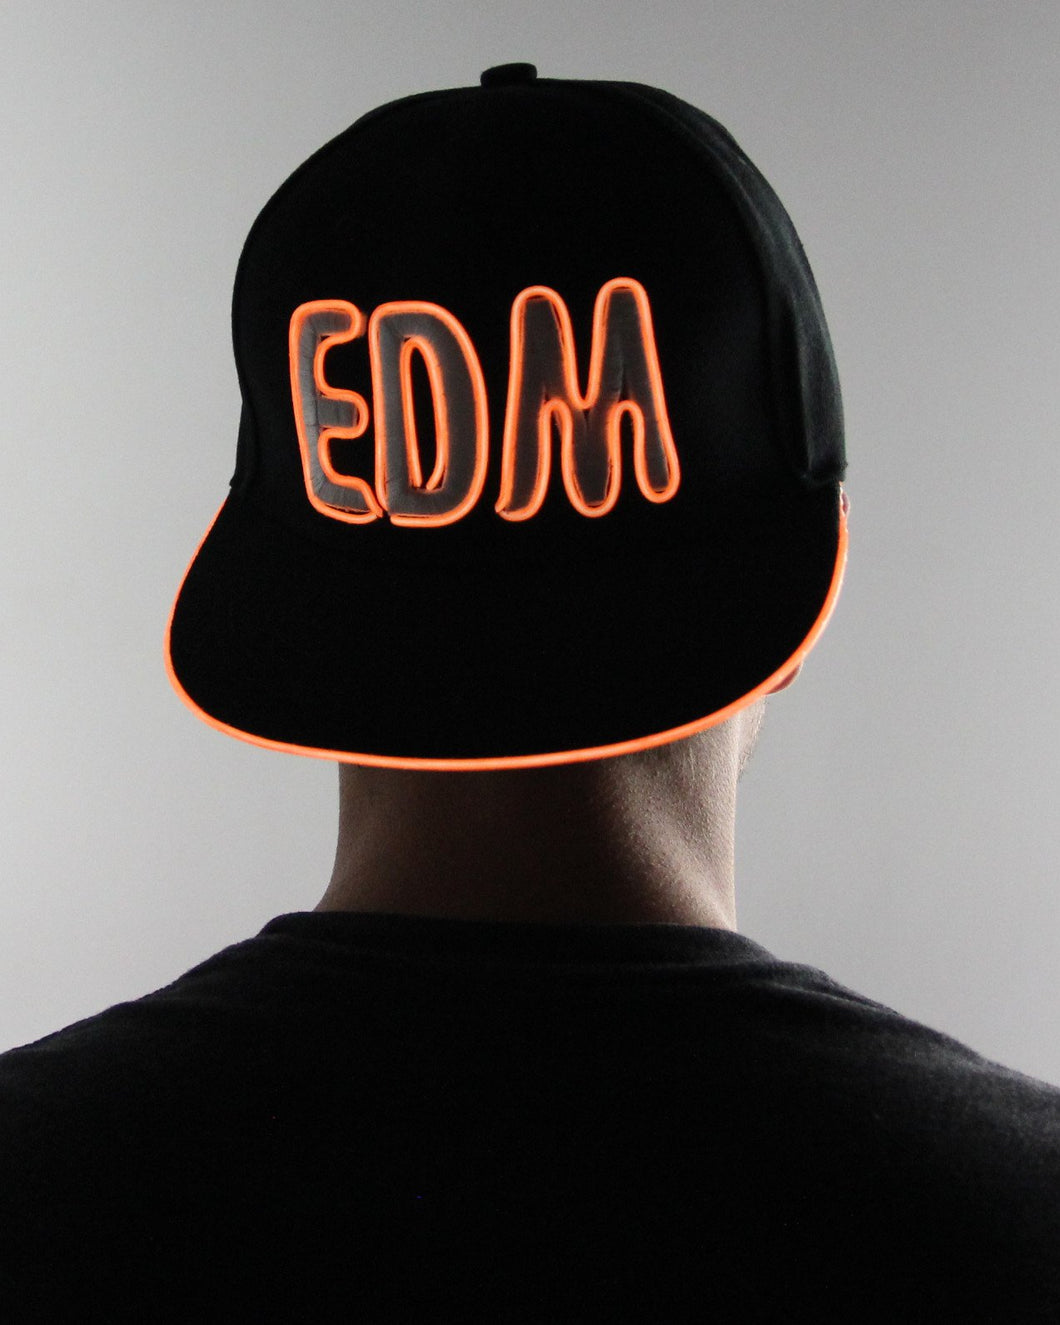 Light Up El Wire Hat - EDM